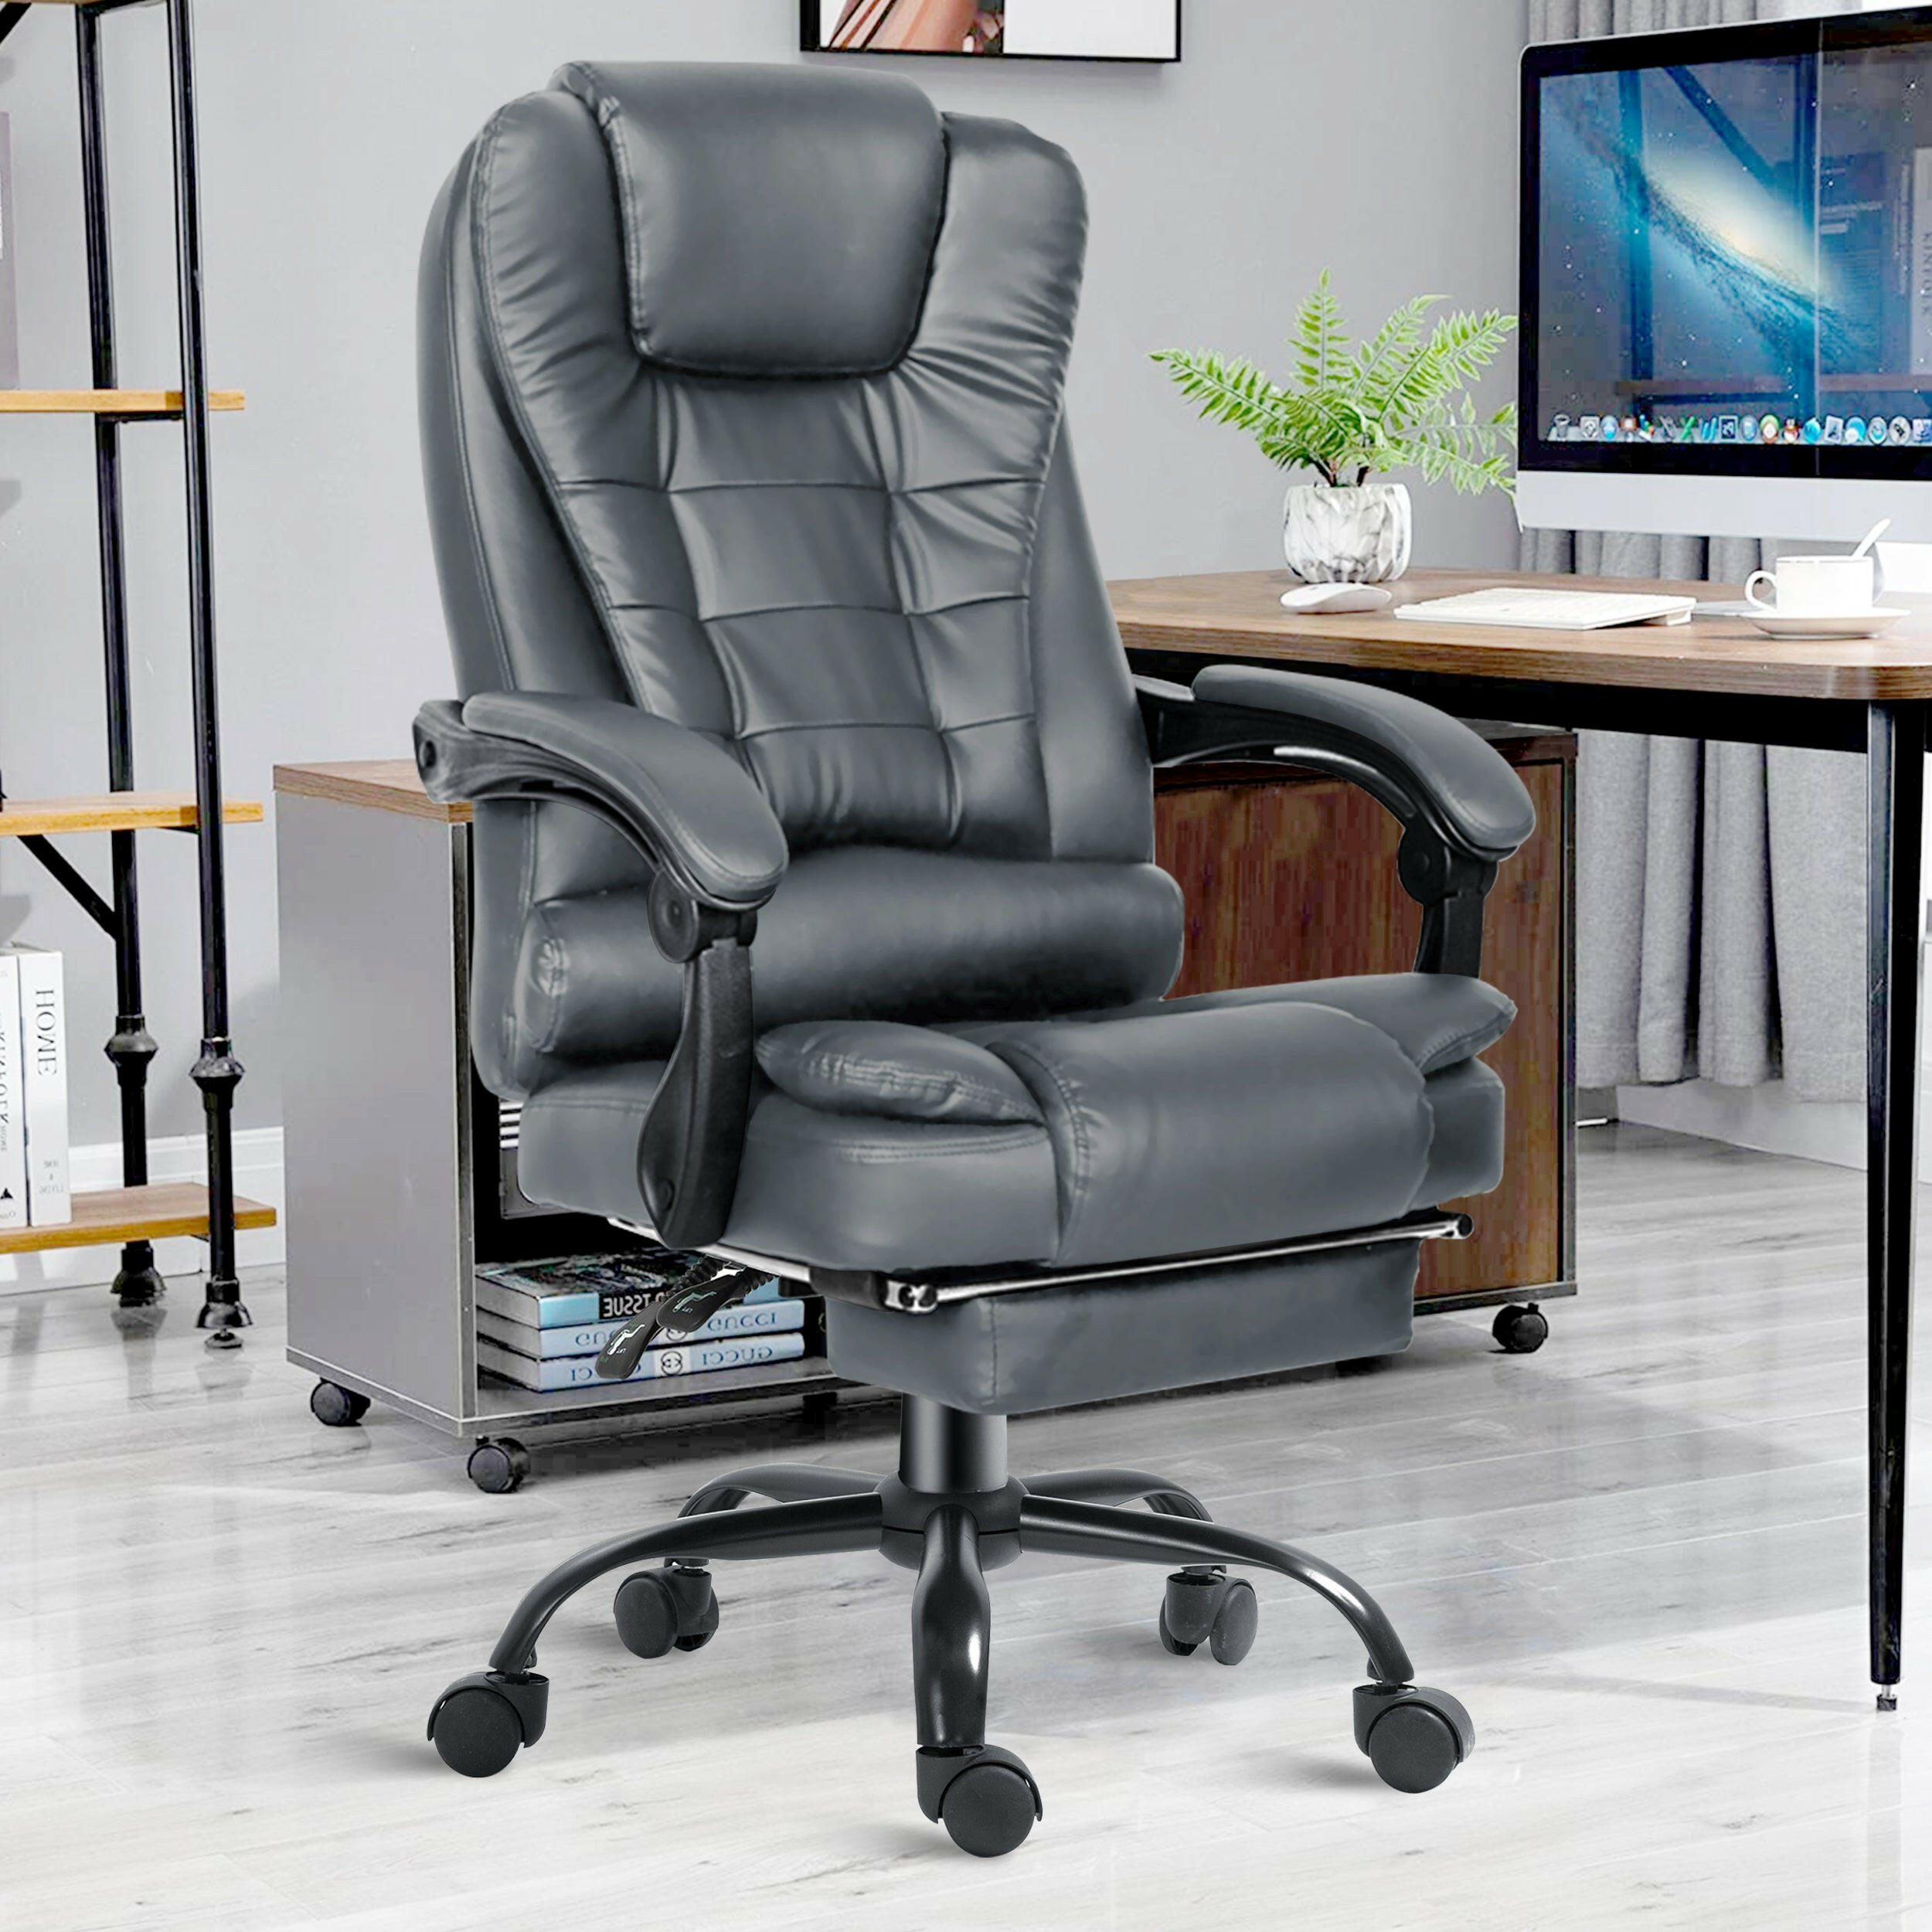 comfiest office chair